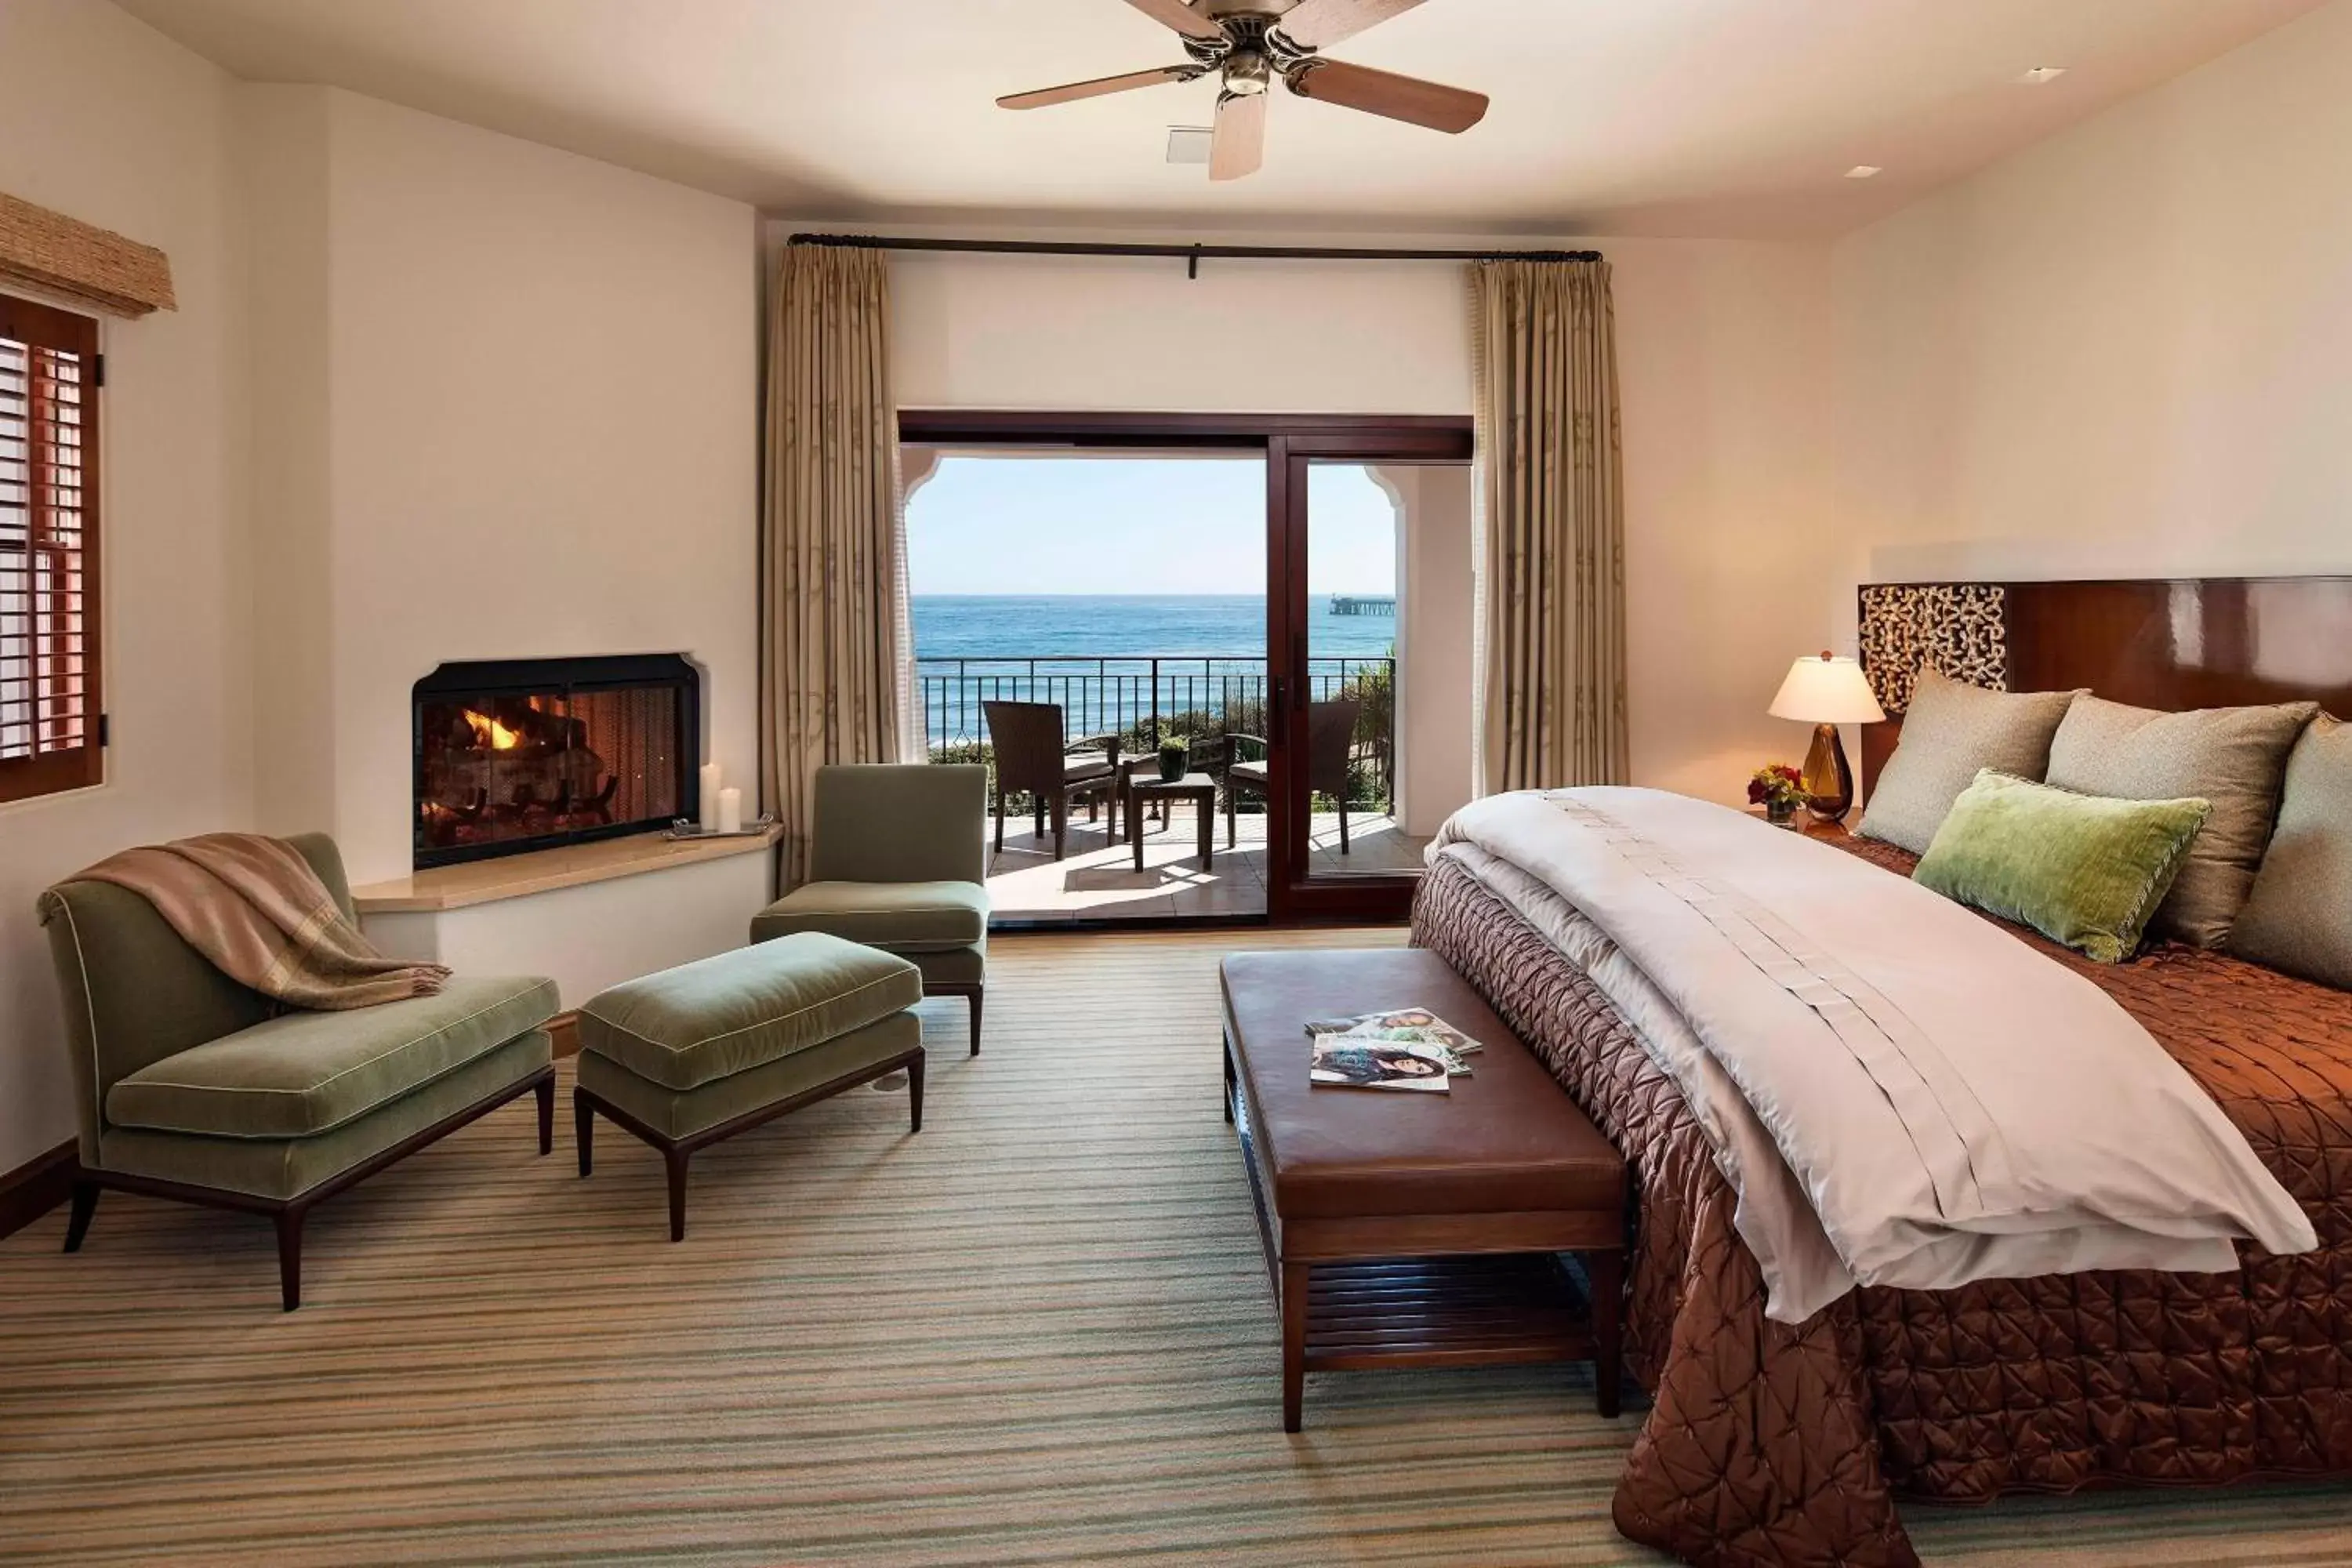 Photo of the whole room in The Ritz-Carlton Bacara, Santa Barbara